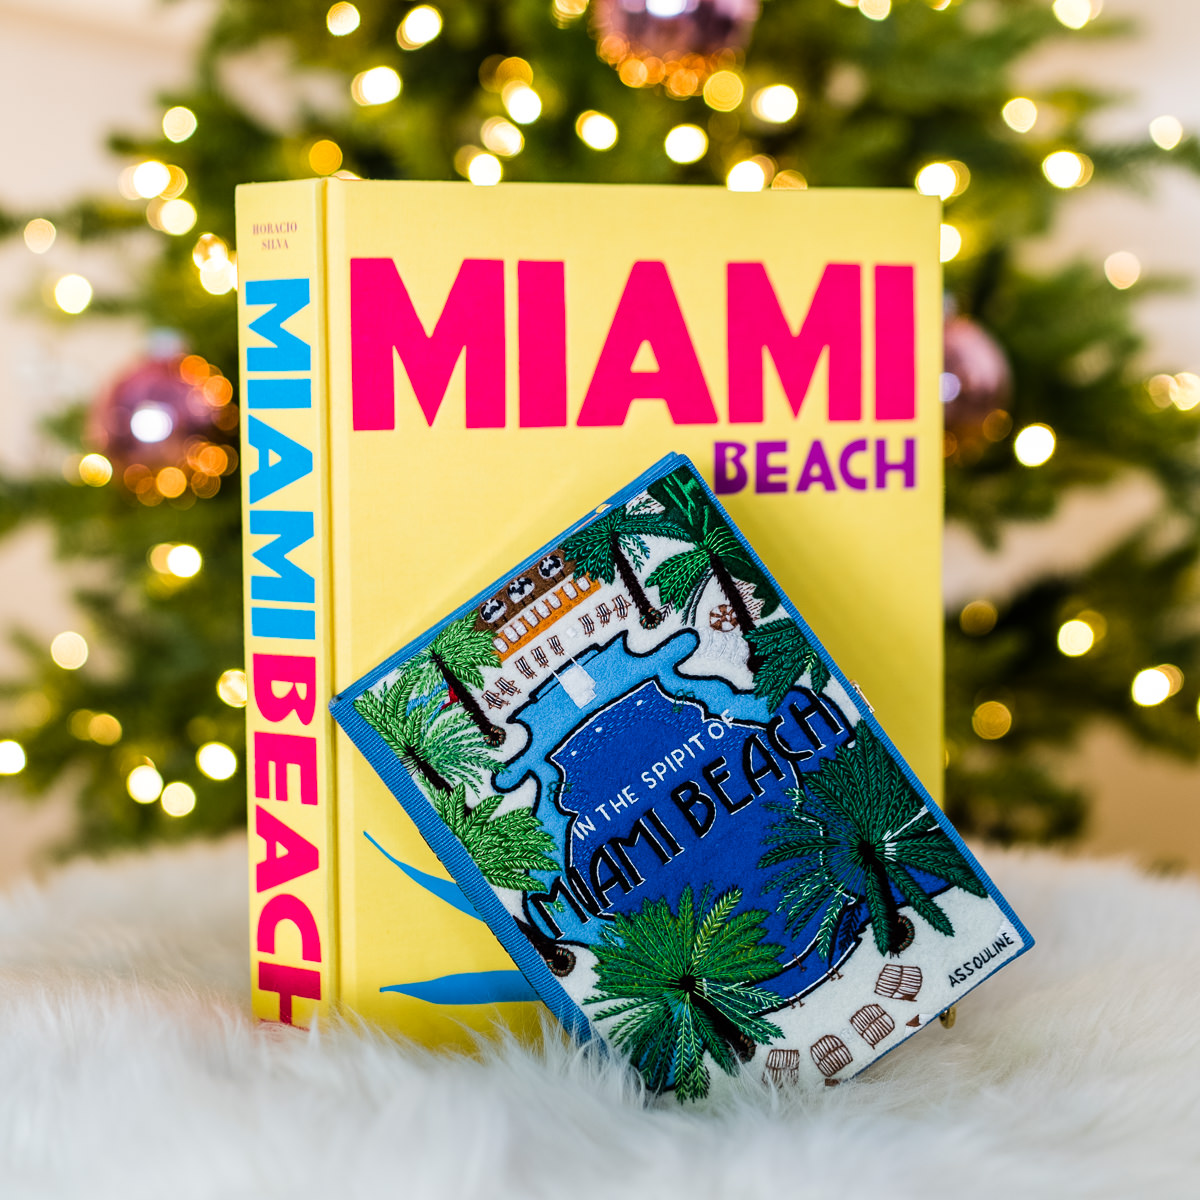 Assouline Miami Beach Book